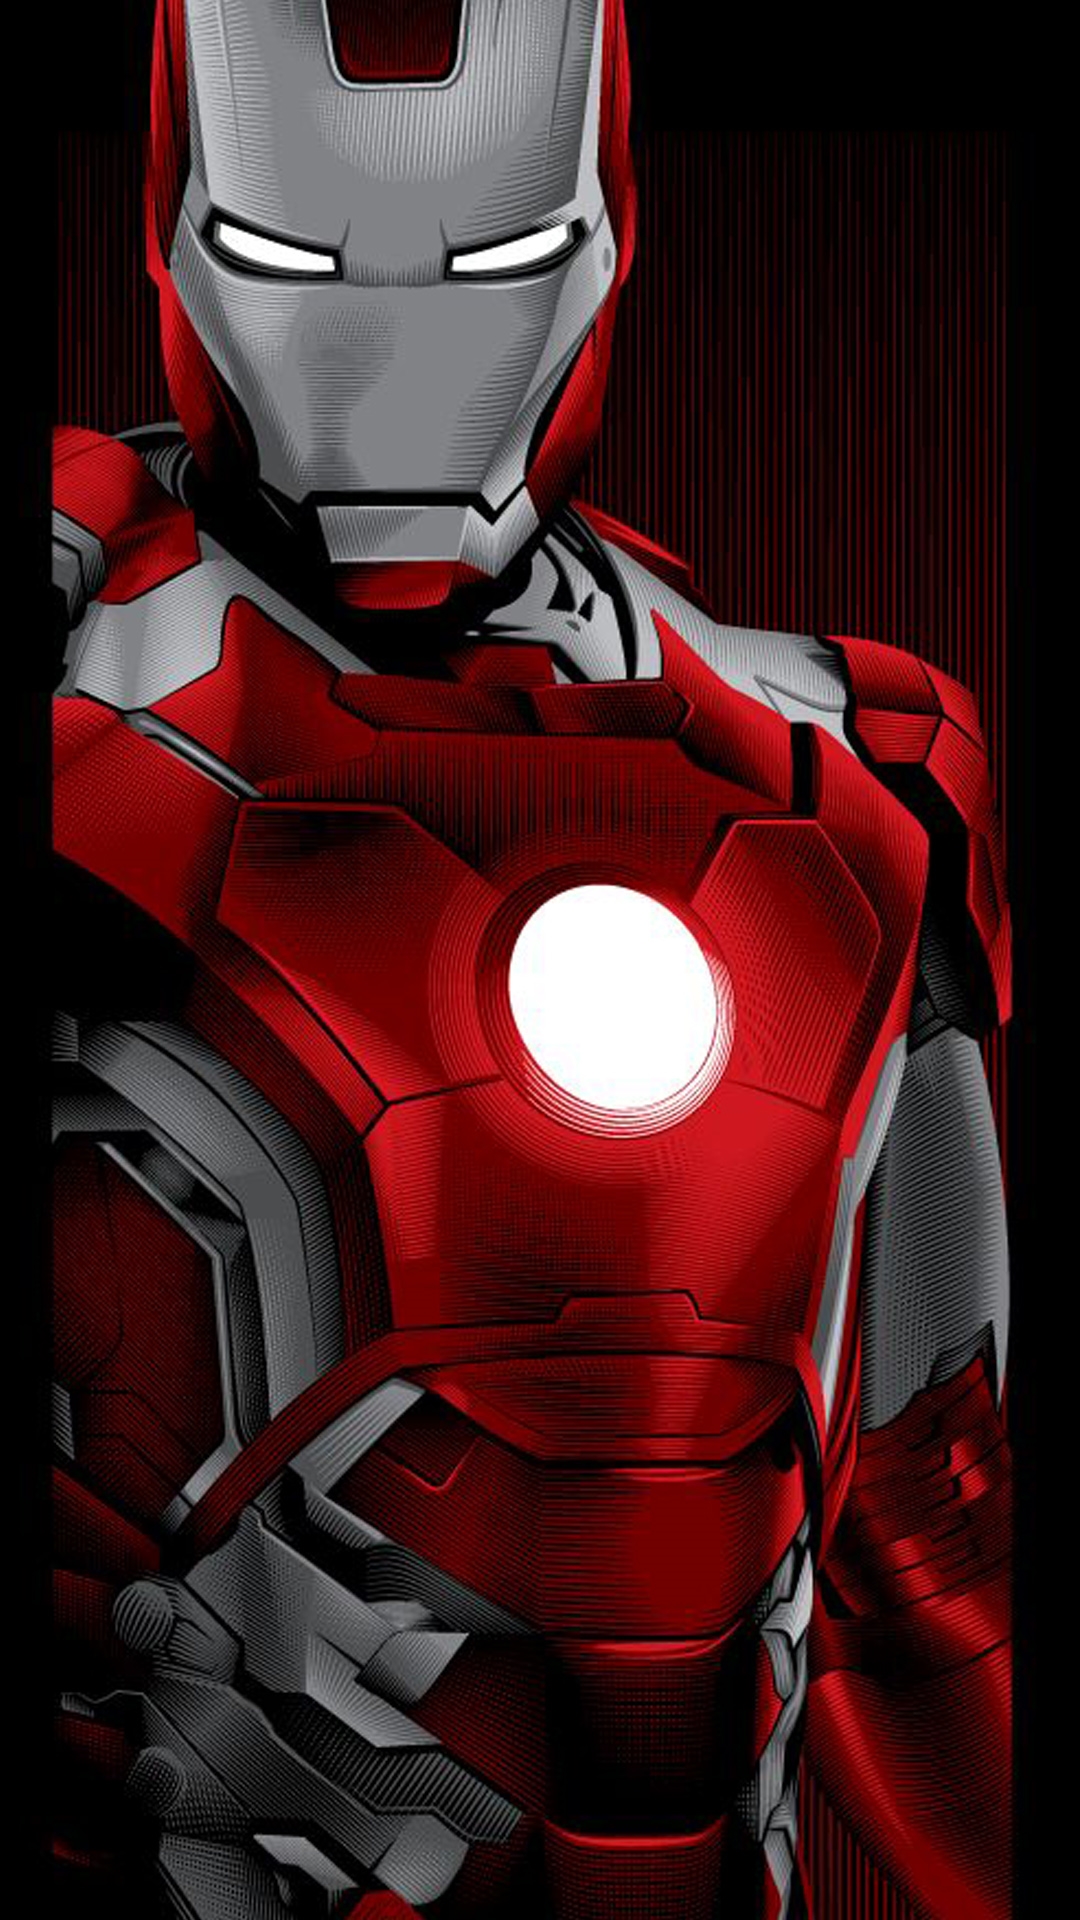  Iron  Man  Wallpaper  Iron  Man  Iphone Wallpaper  Iron  Man  